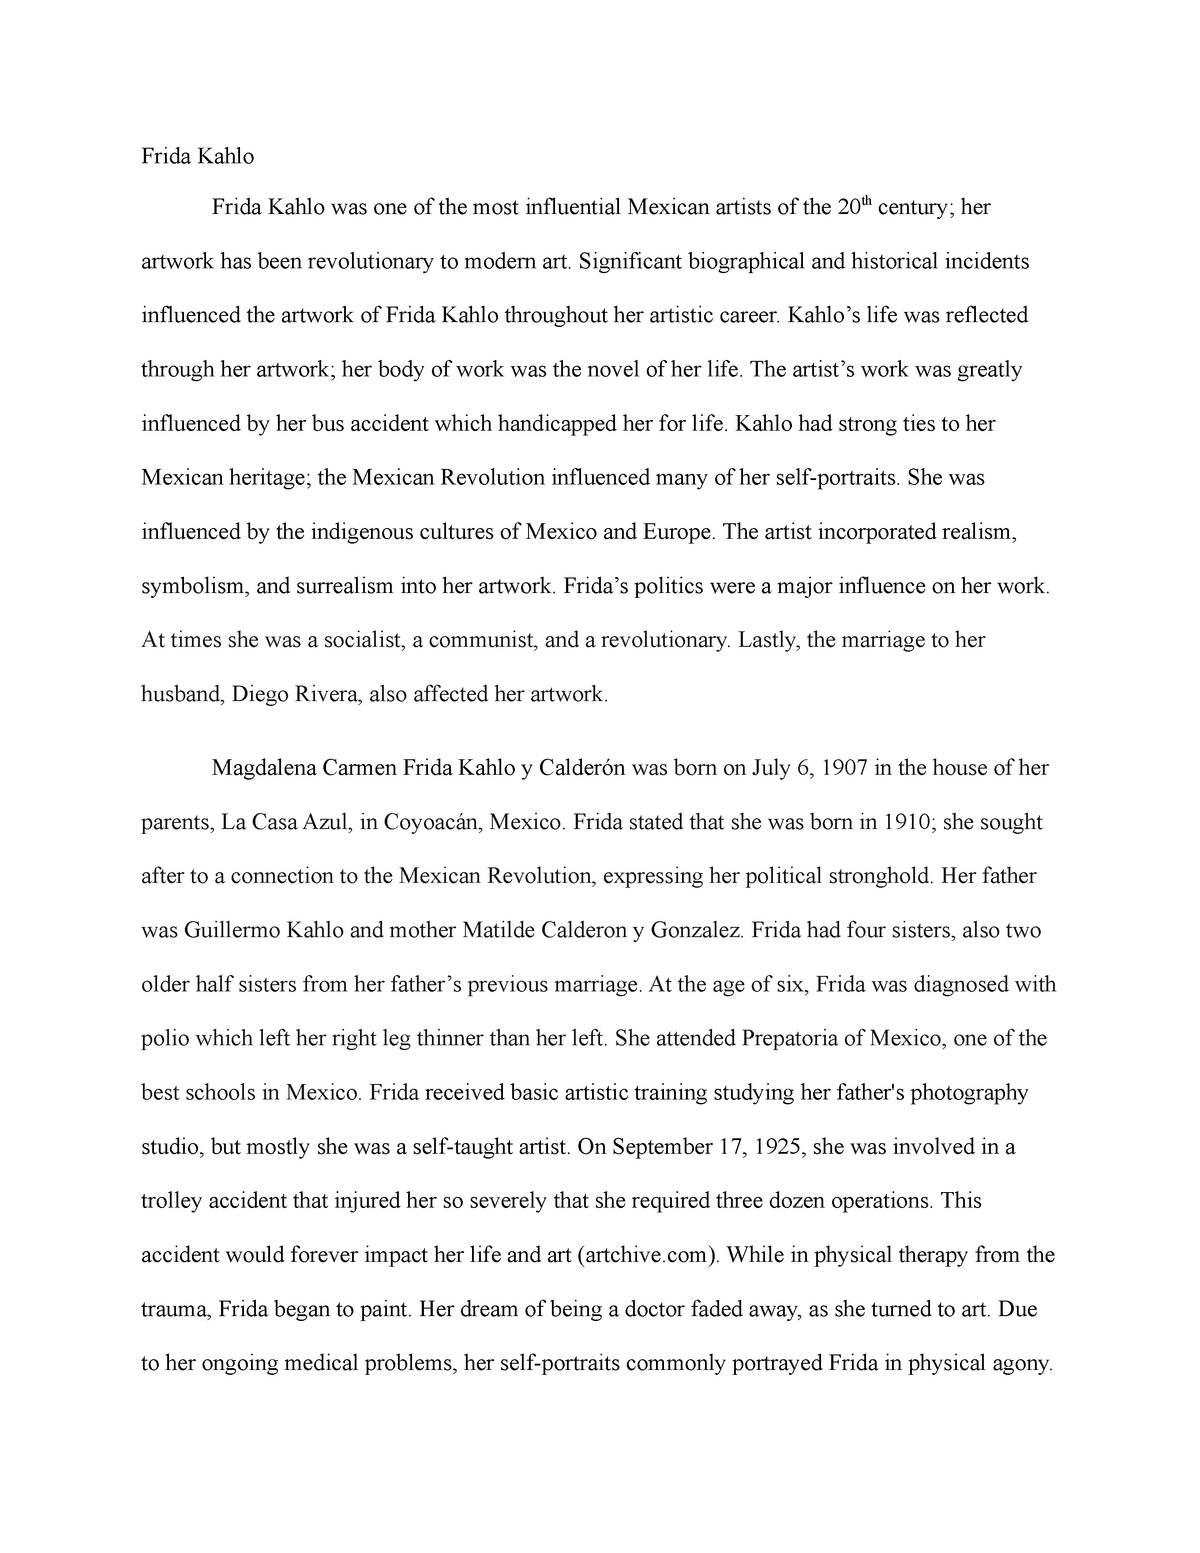 an essay about frida kahlo